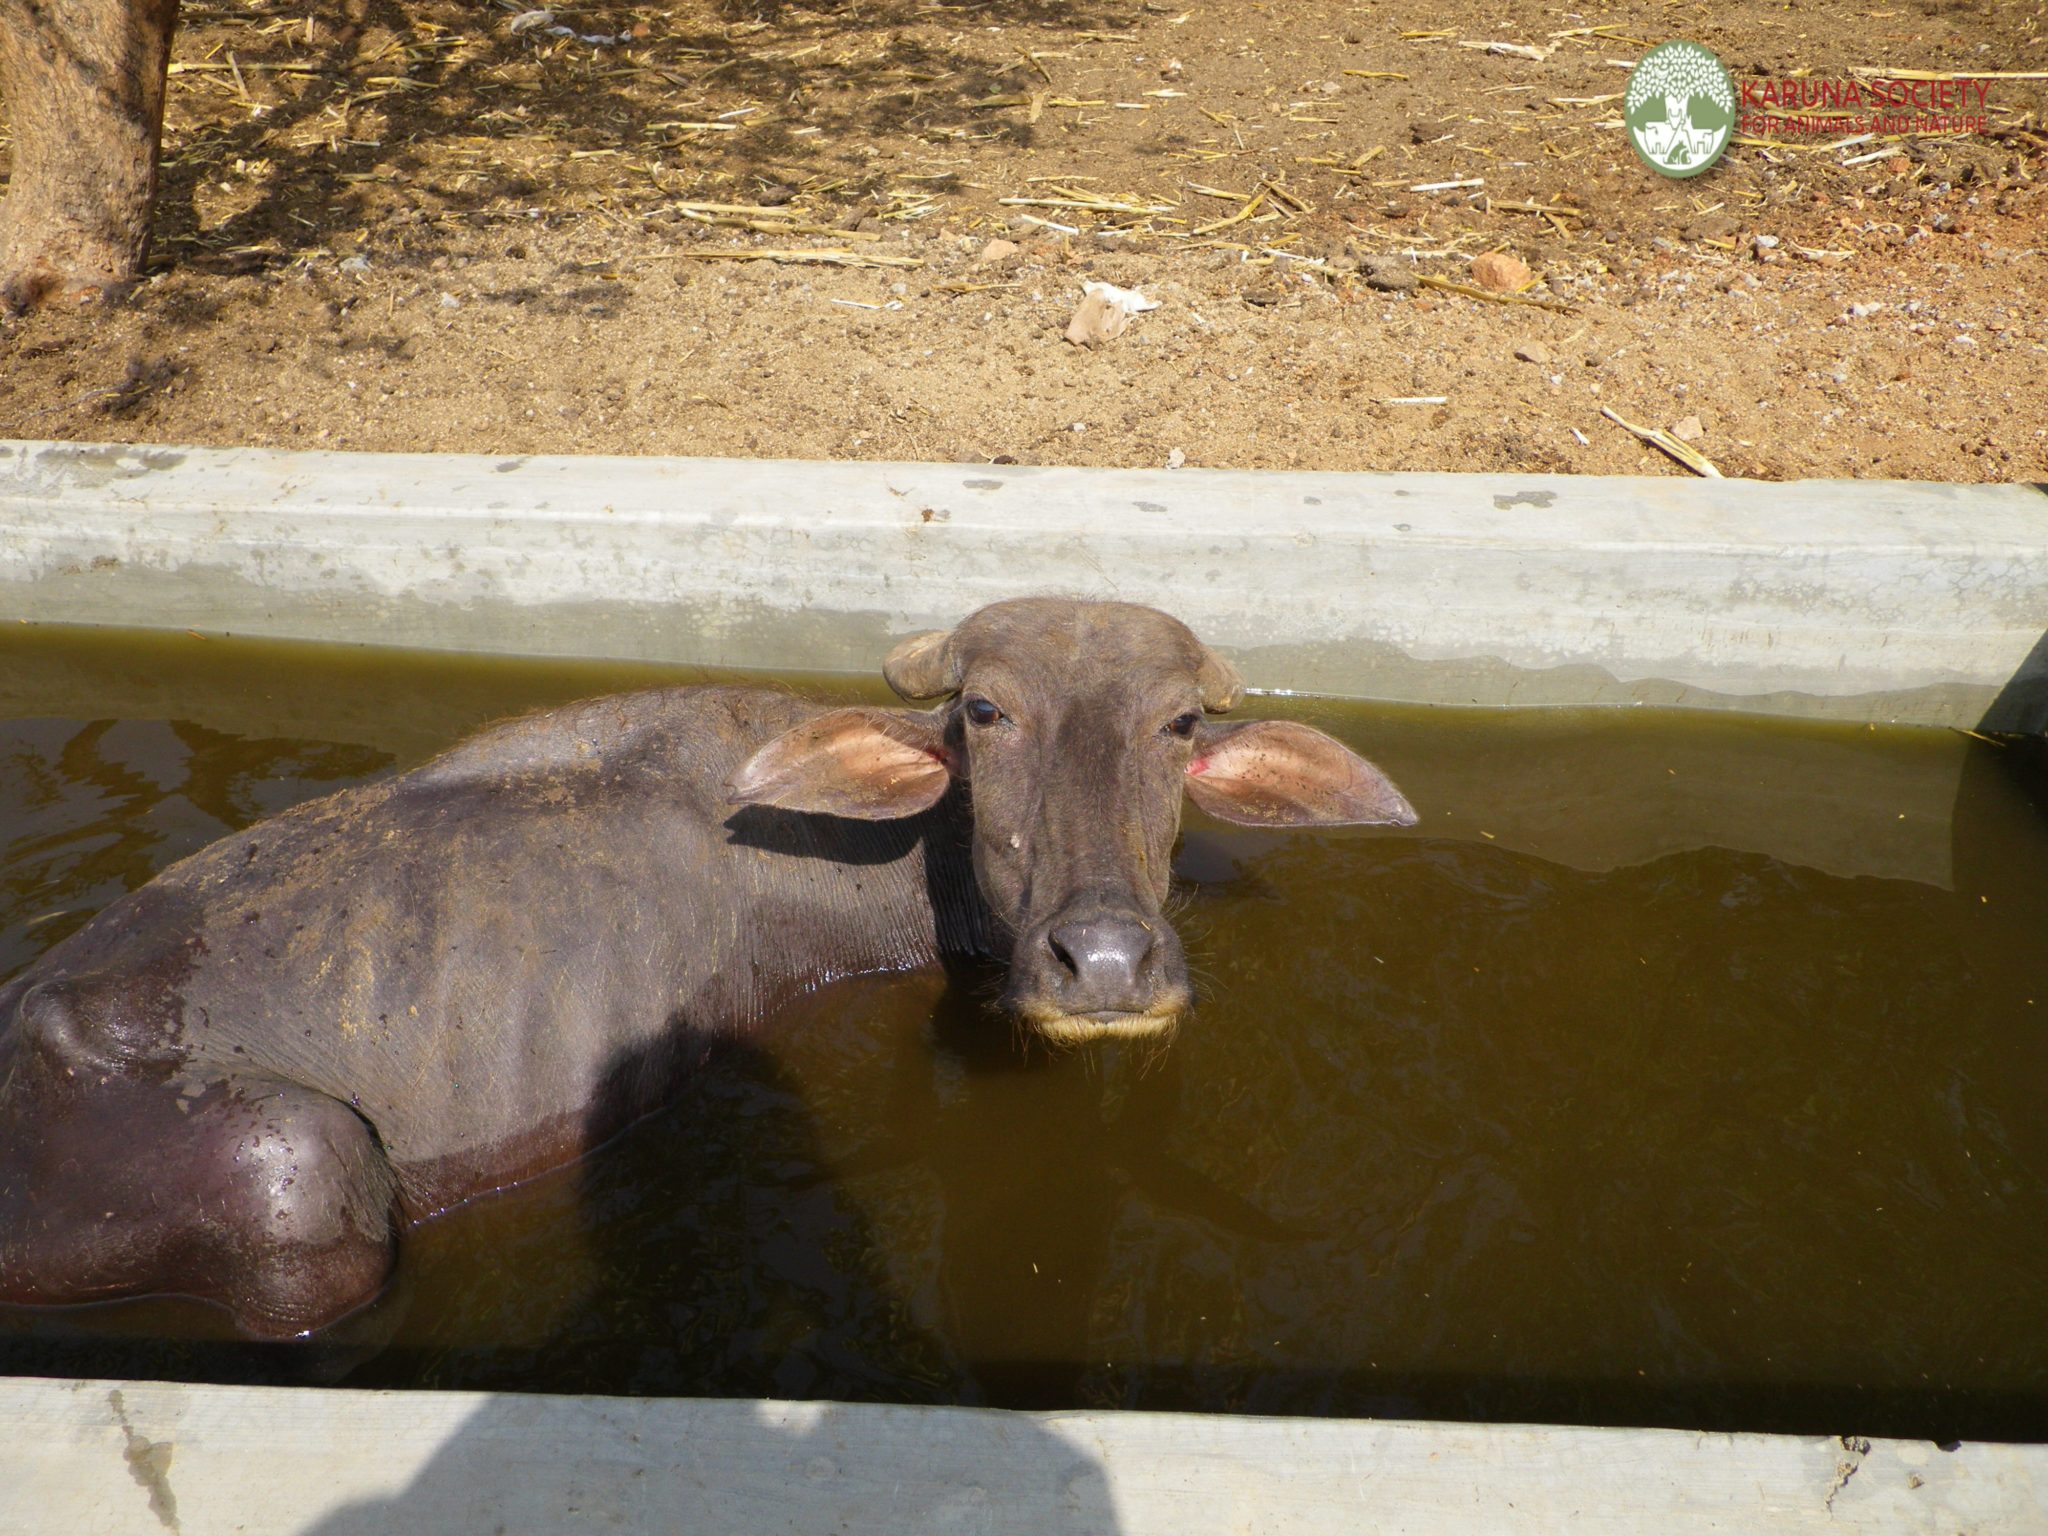 Bathtub – Karuna Society for Animals and Nature